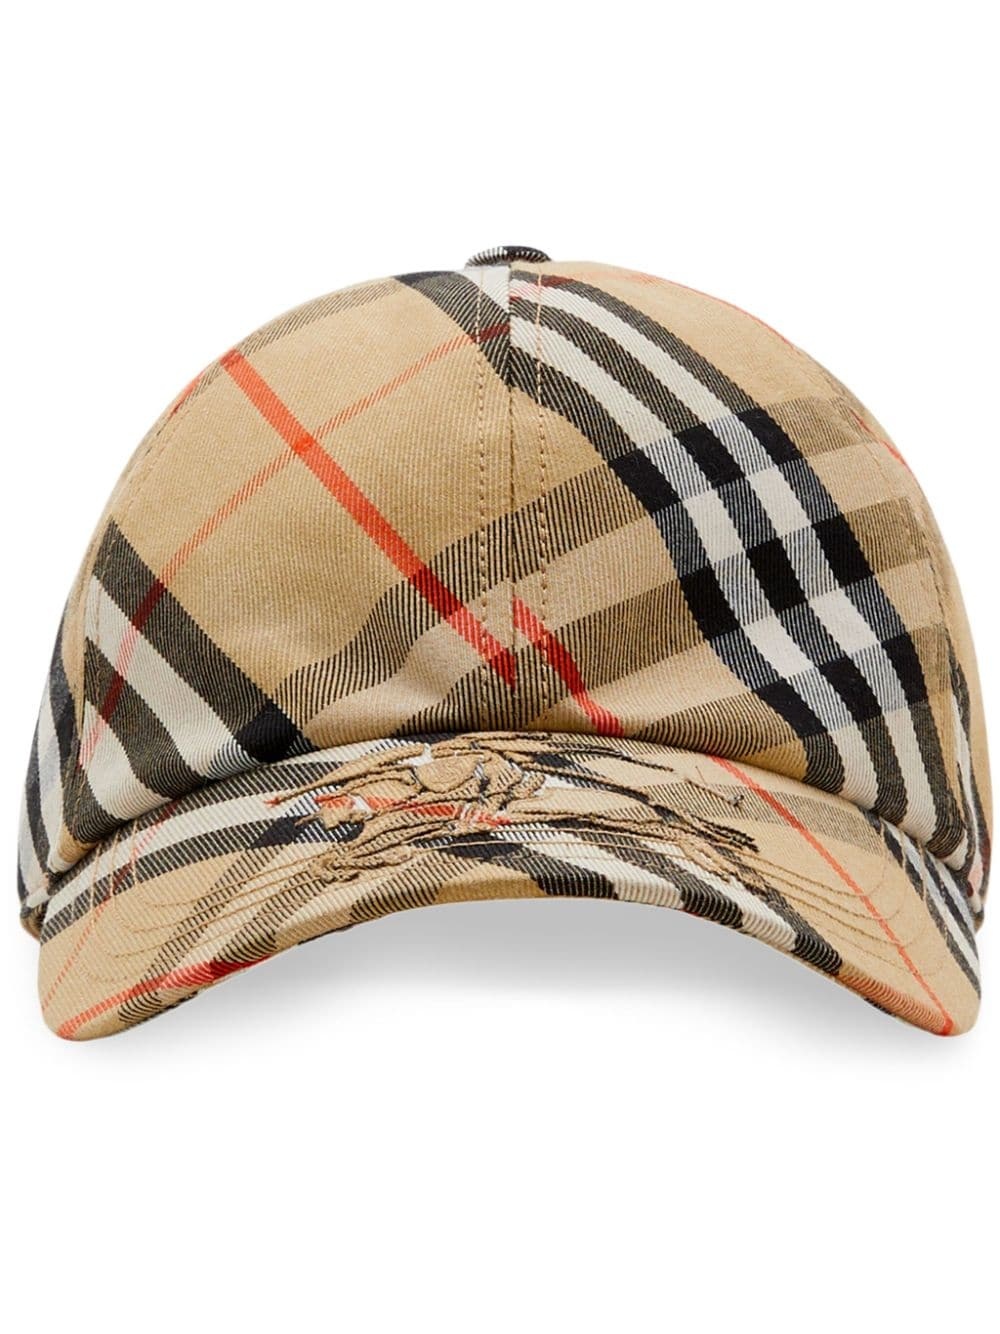 Vintage Check baseball cap - 1